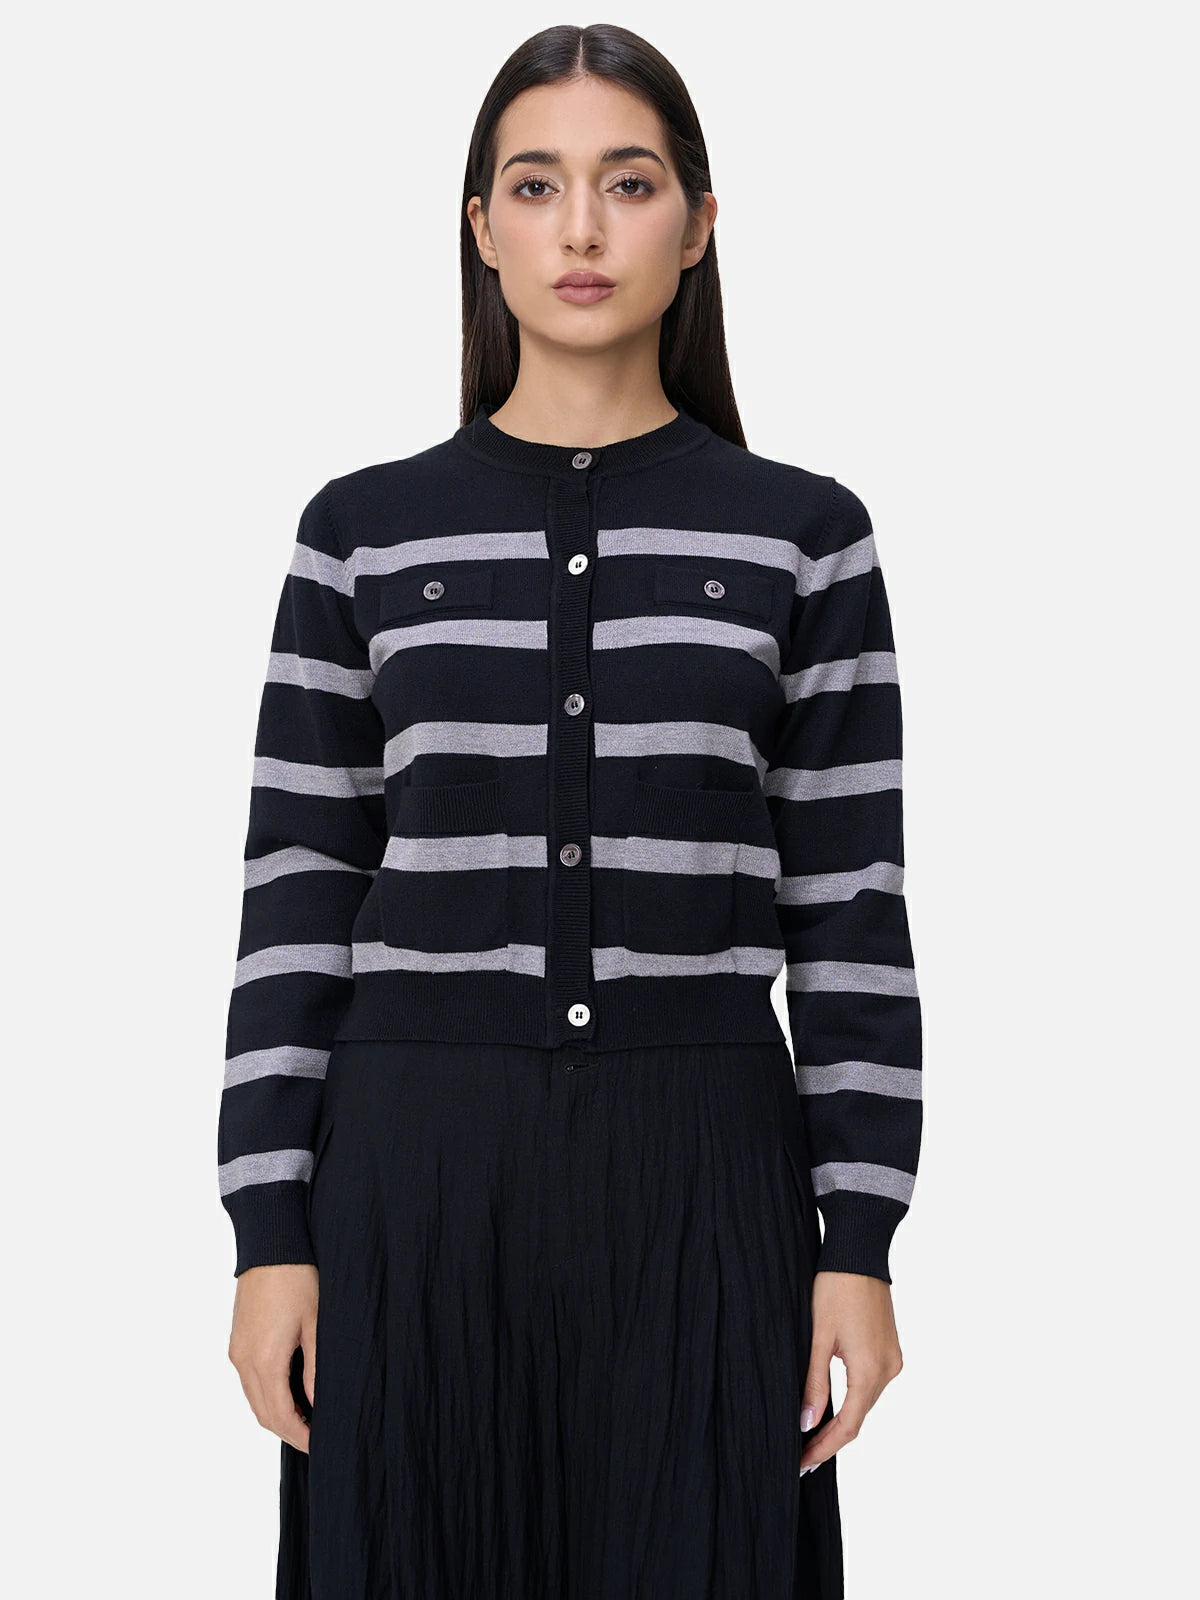 Stylish striped cardigan sweater with a classic round neckline